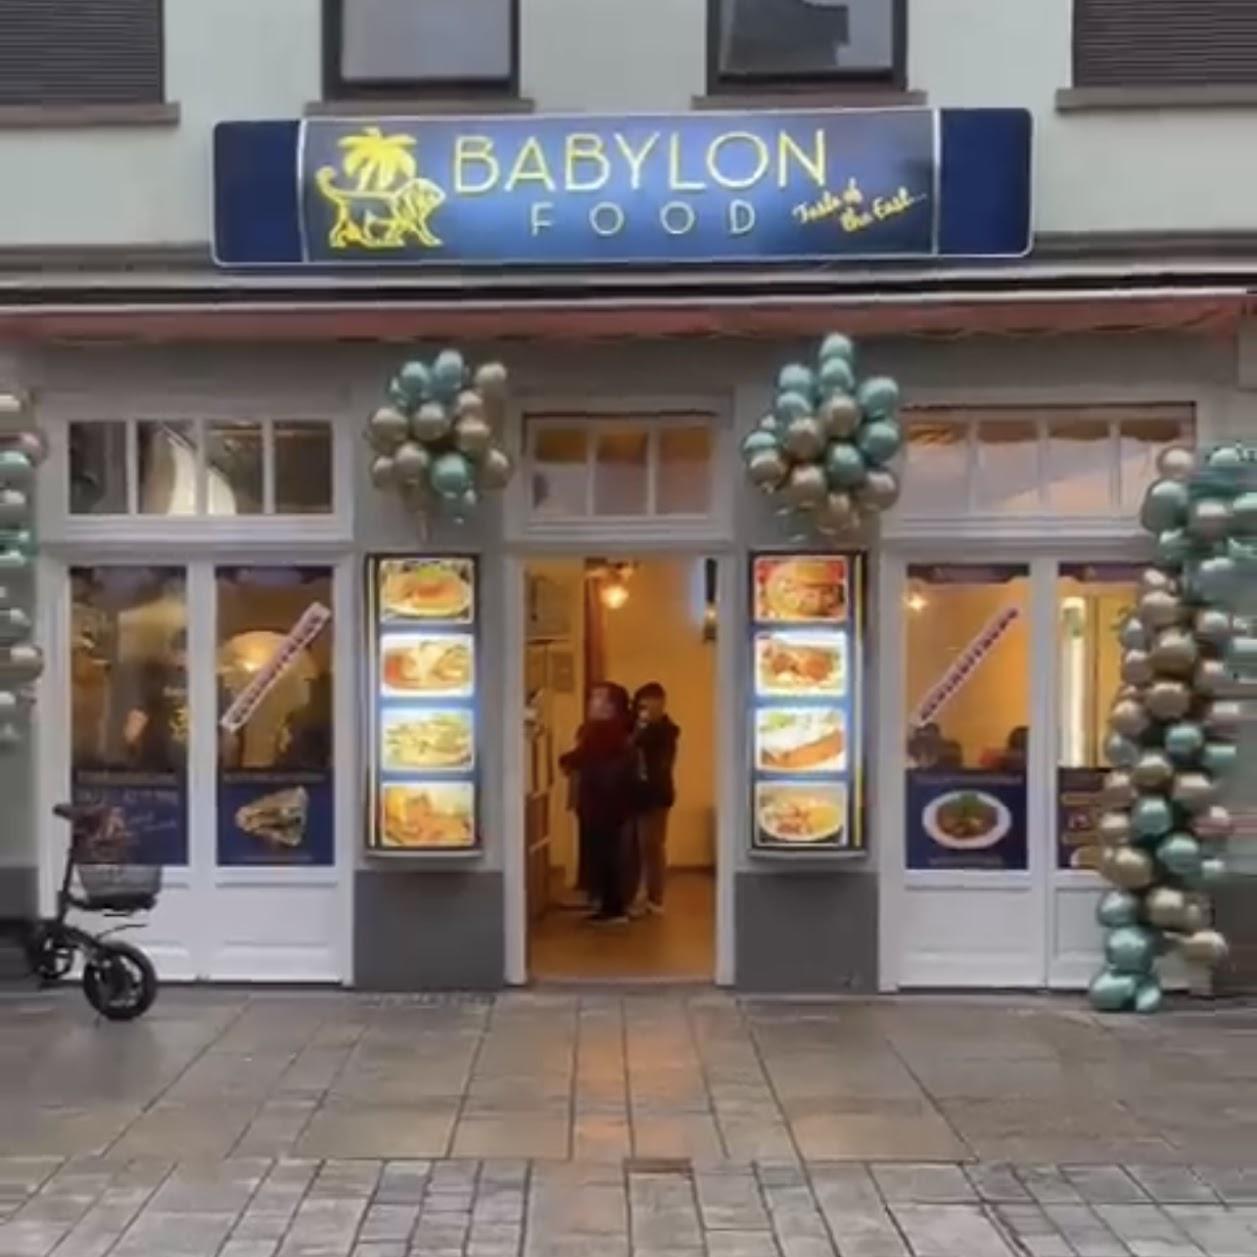 Restaurant "Babylon Food" in Verden (Aller)